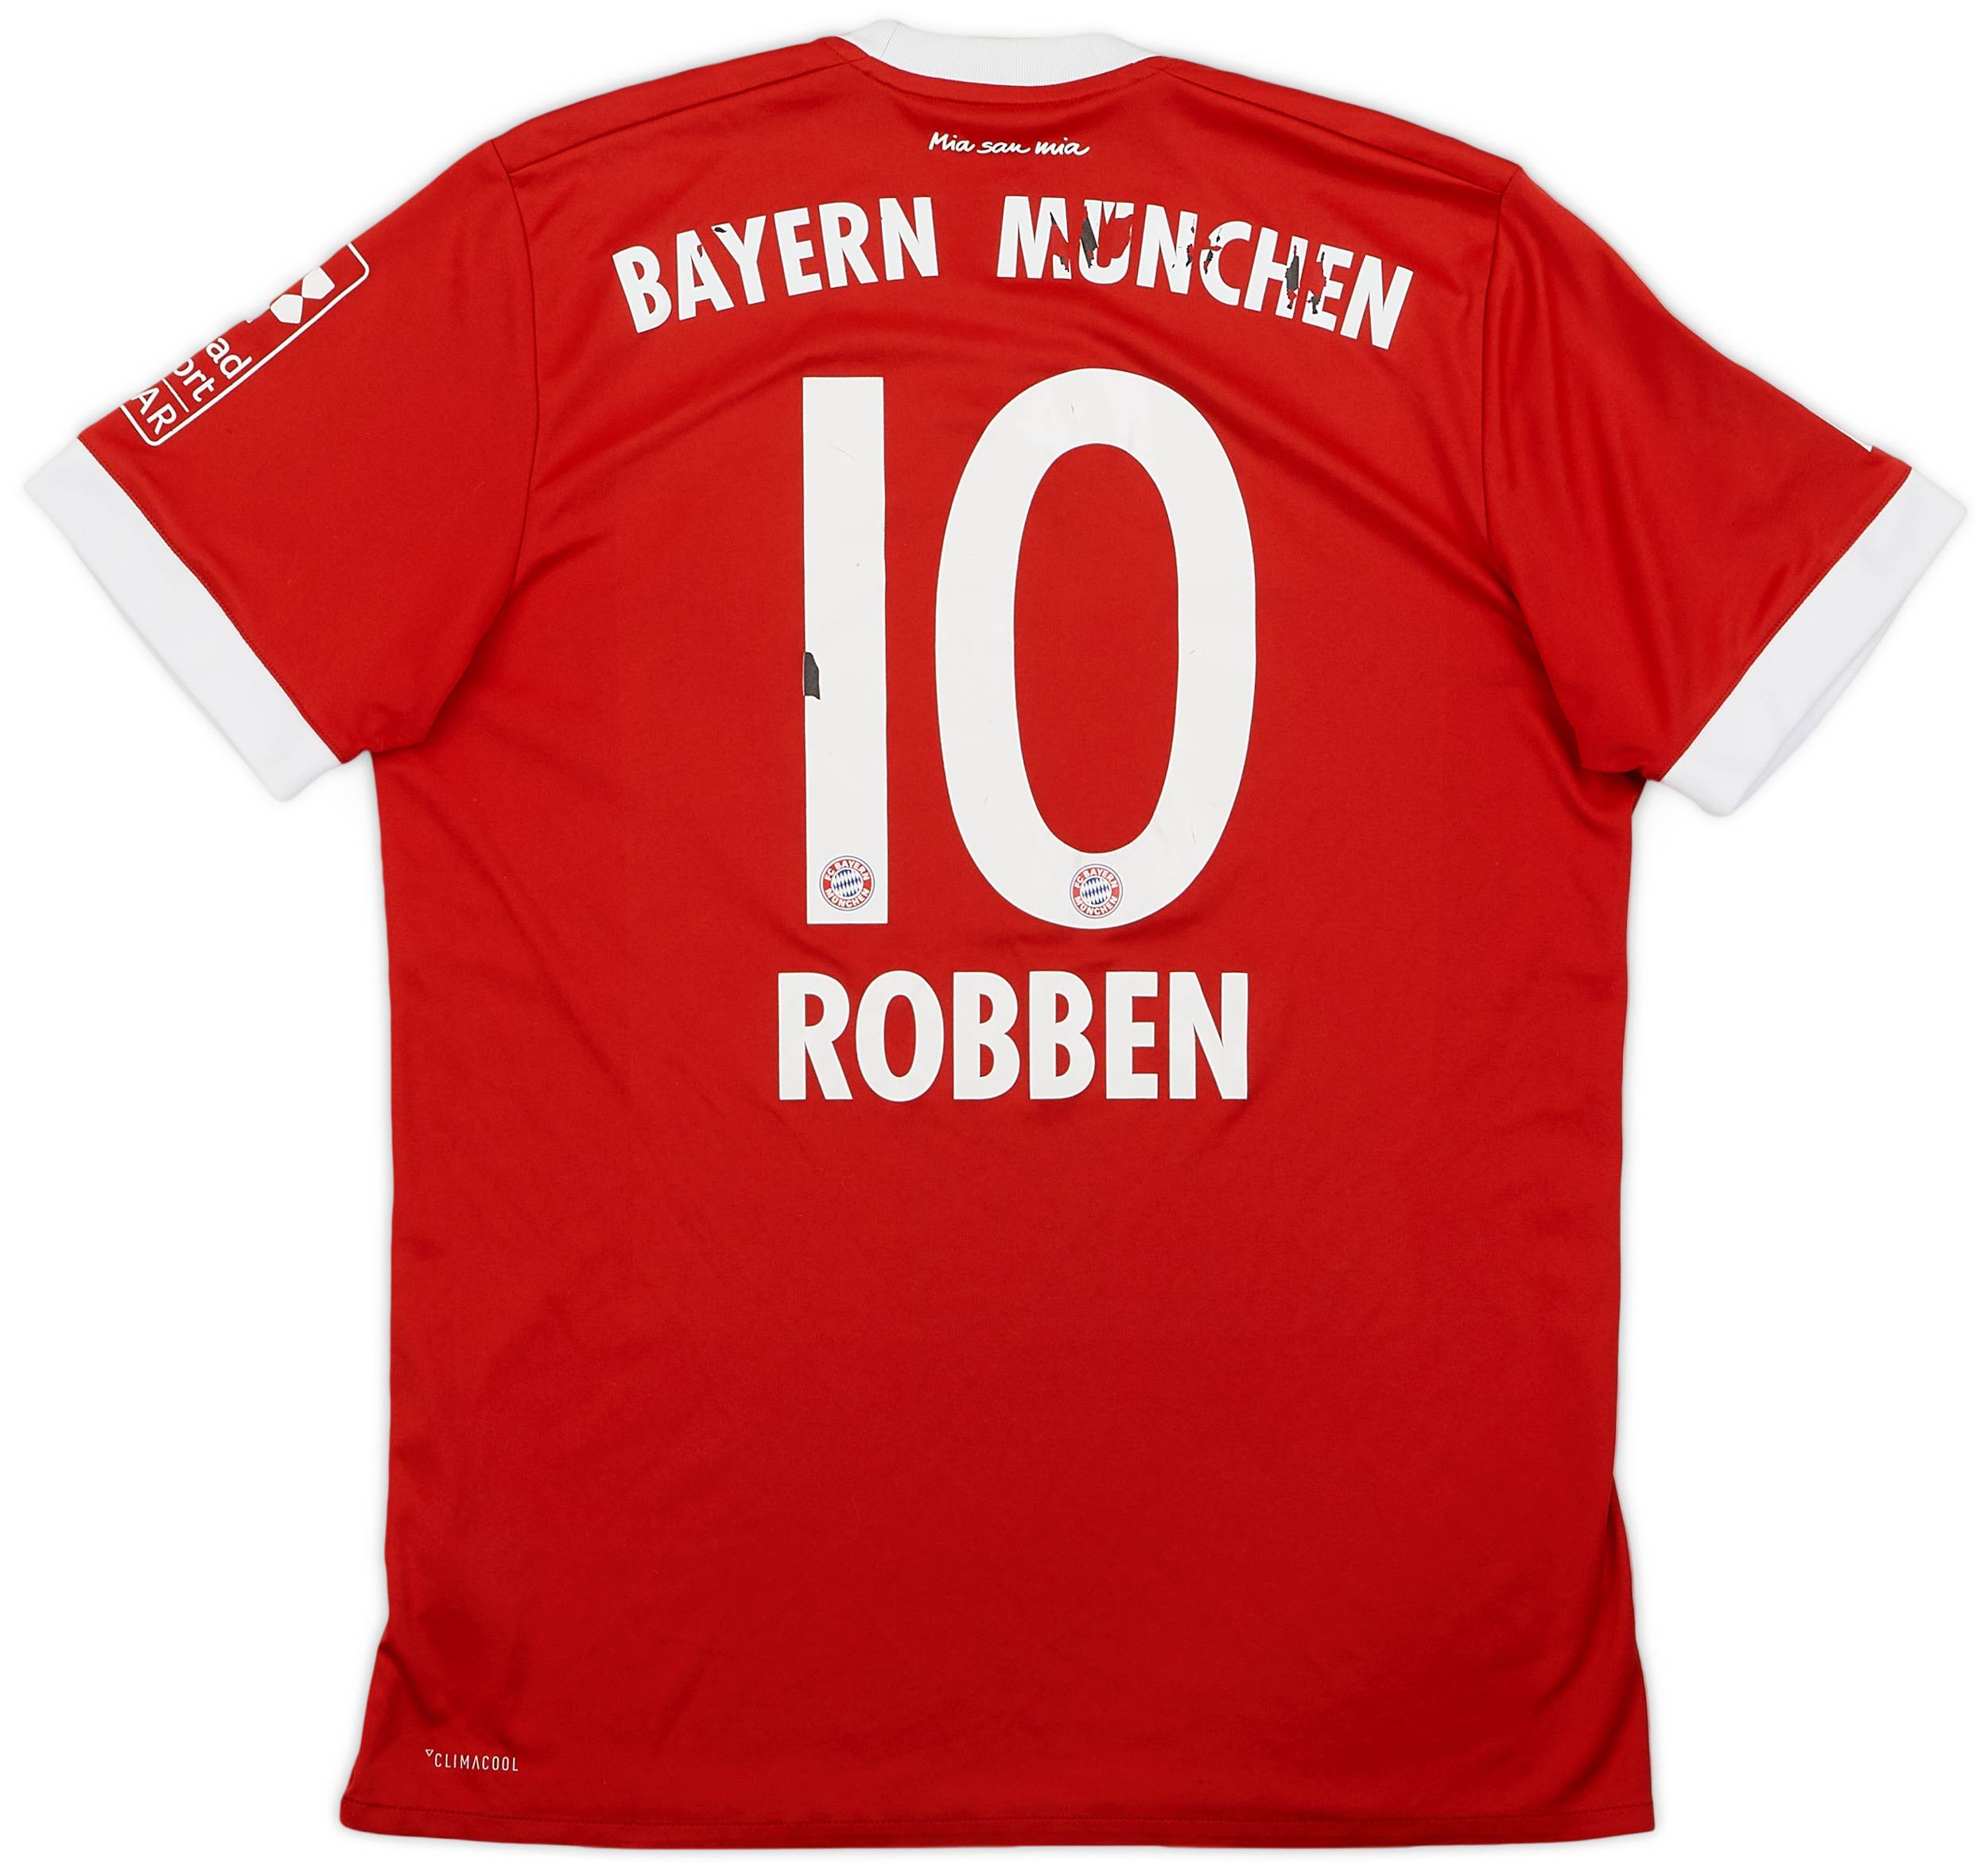 2017-18 Bayern Munich Home Shirt Robben #10 - 5/10 - (M)